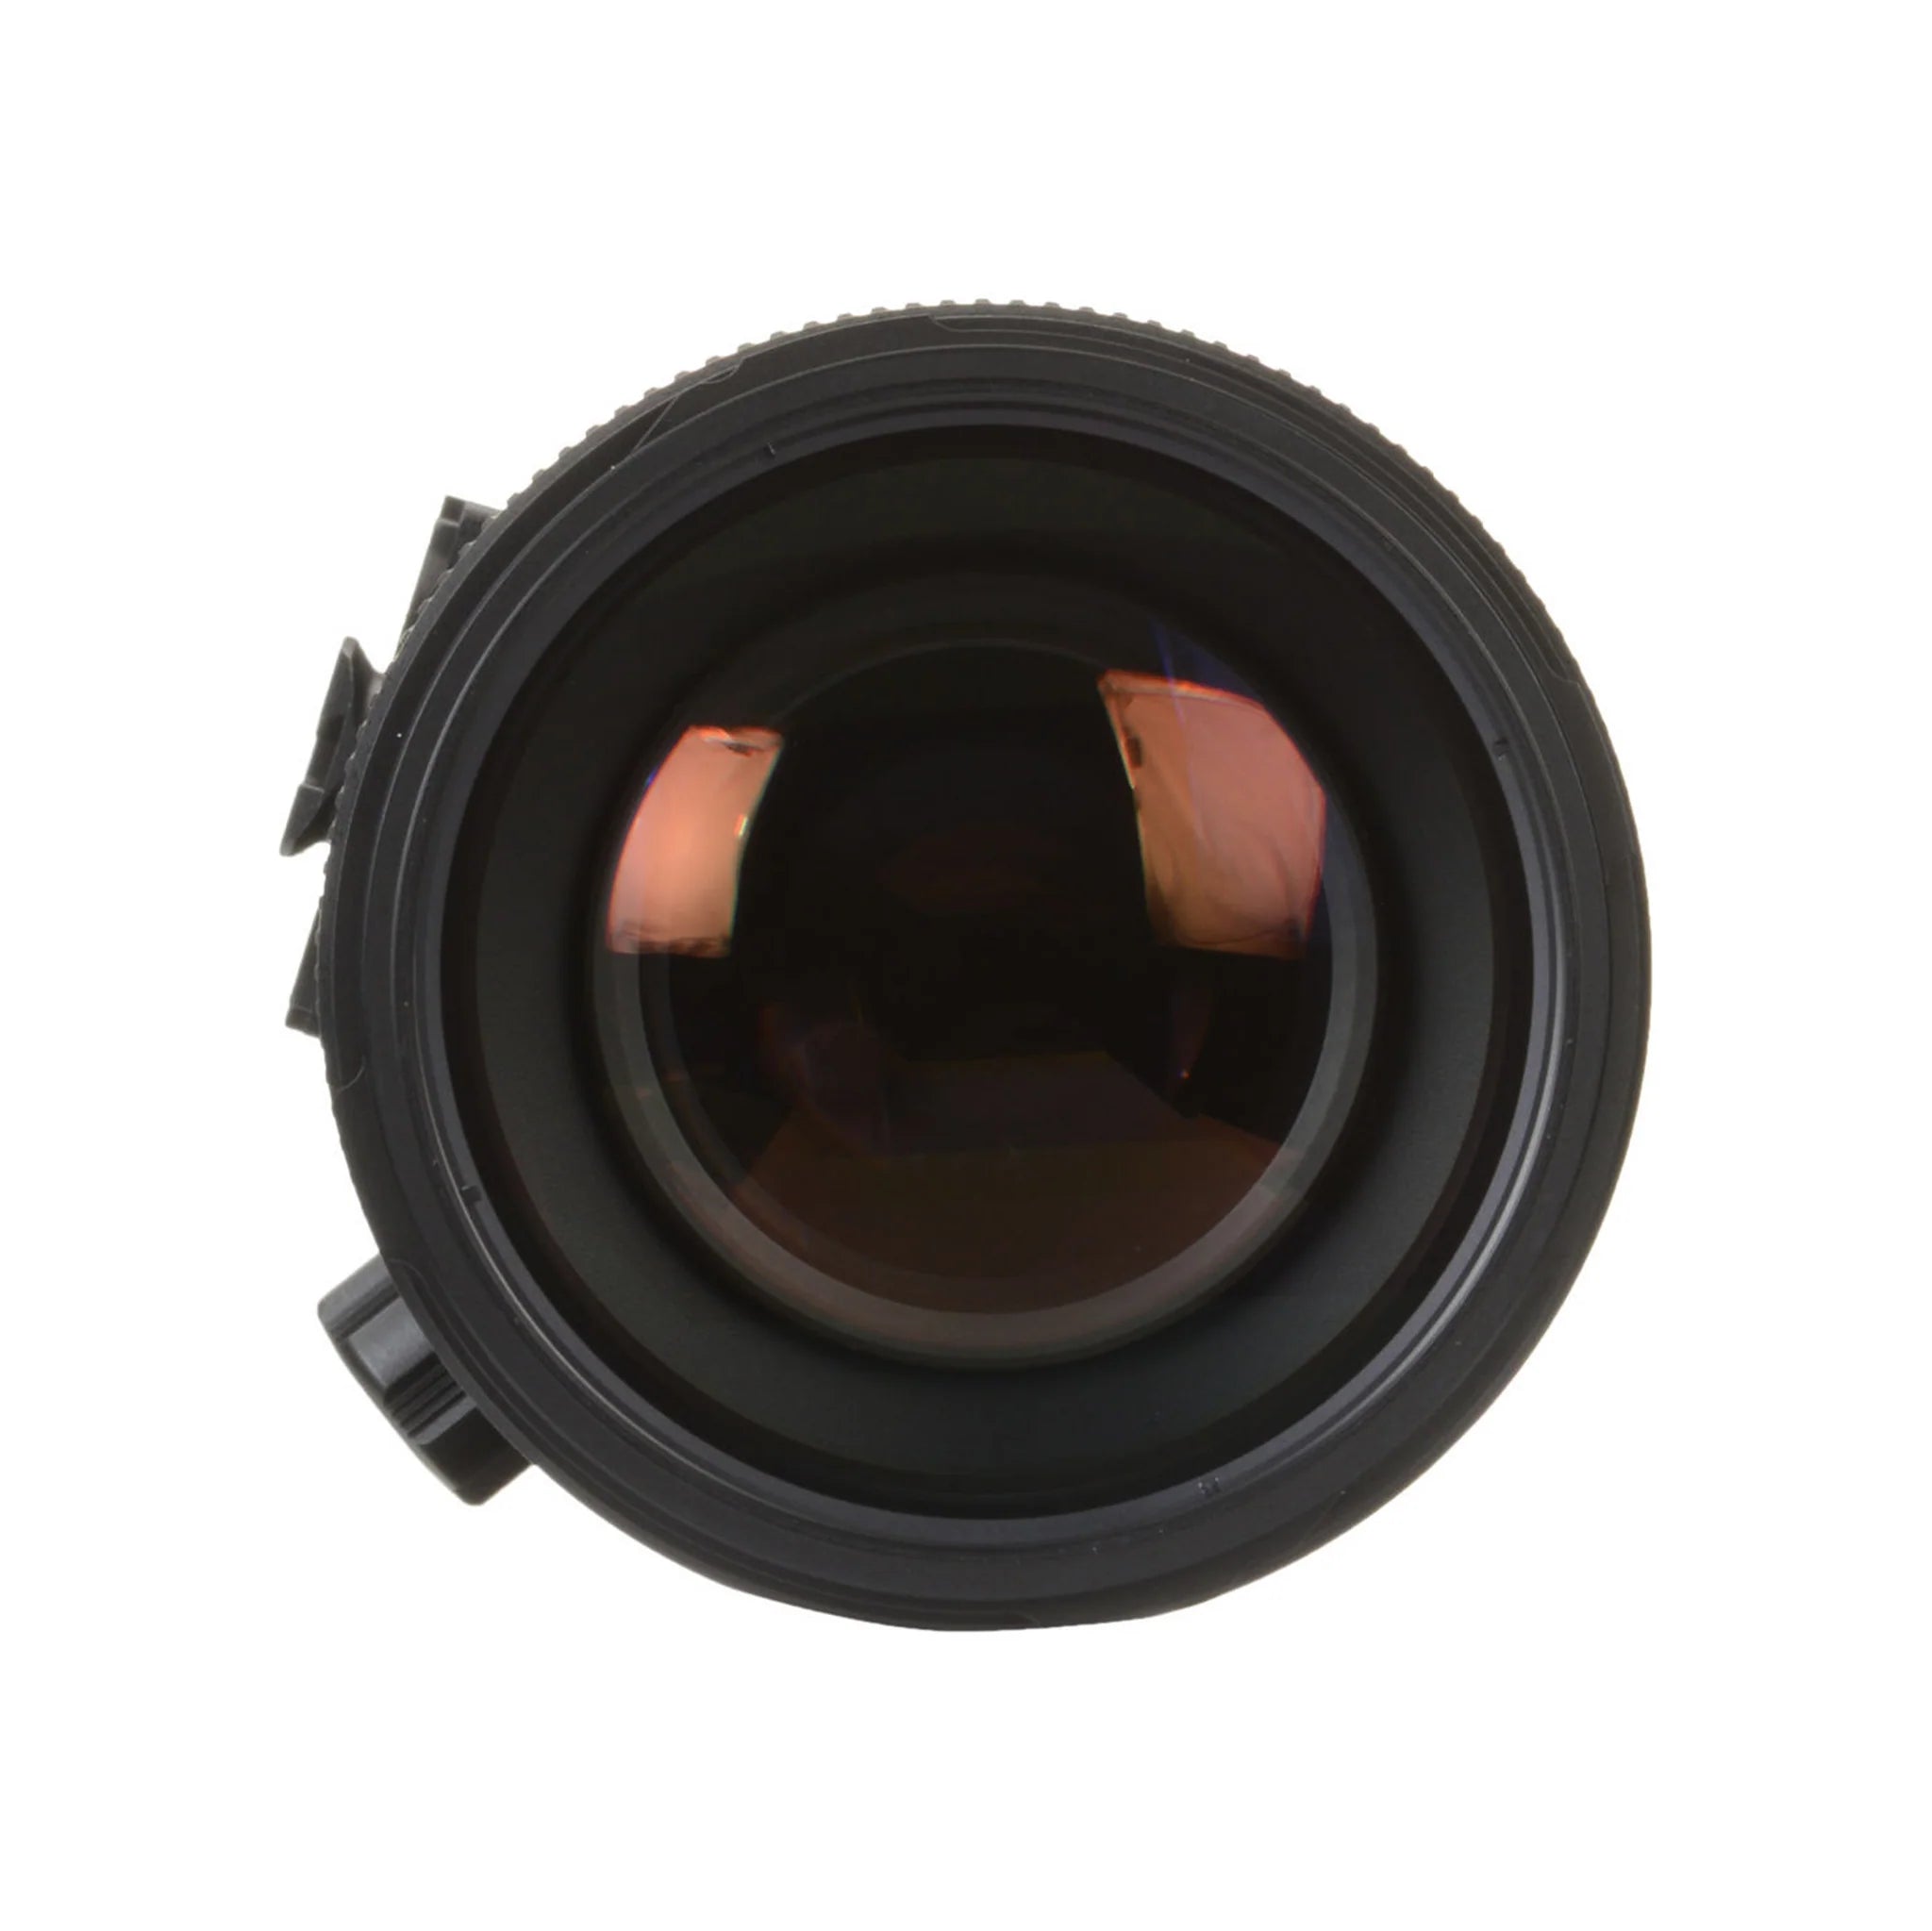 Pentax HD D-FA* 70-200mm F2.8 ED DC AW Lens